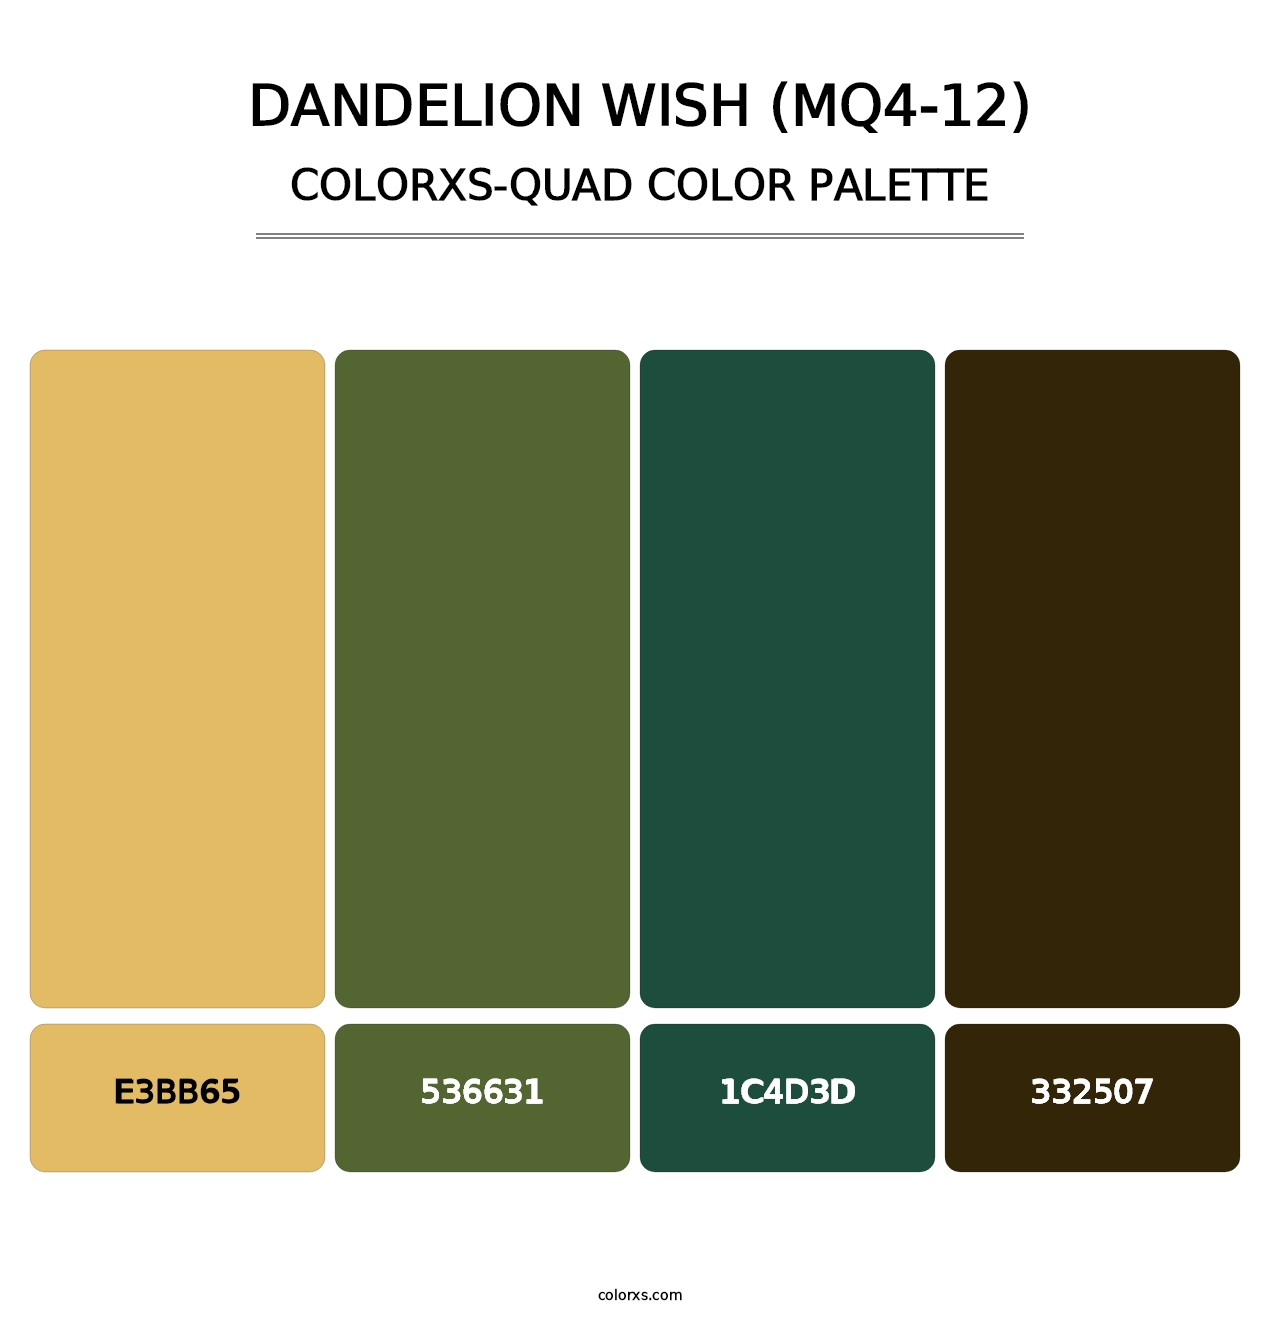 Dandelion Wish (MQ4-12) - Colorxs Quad Palette